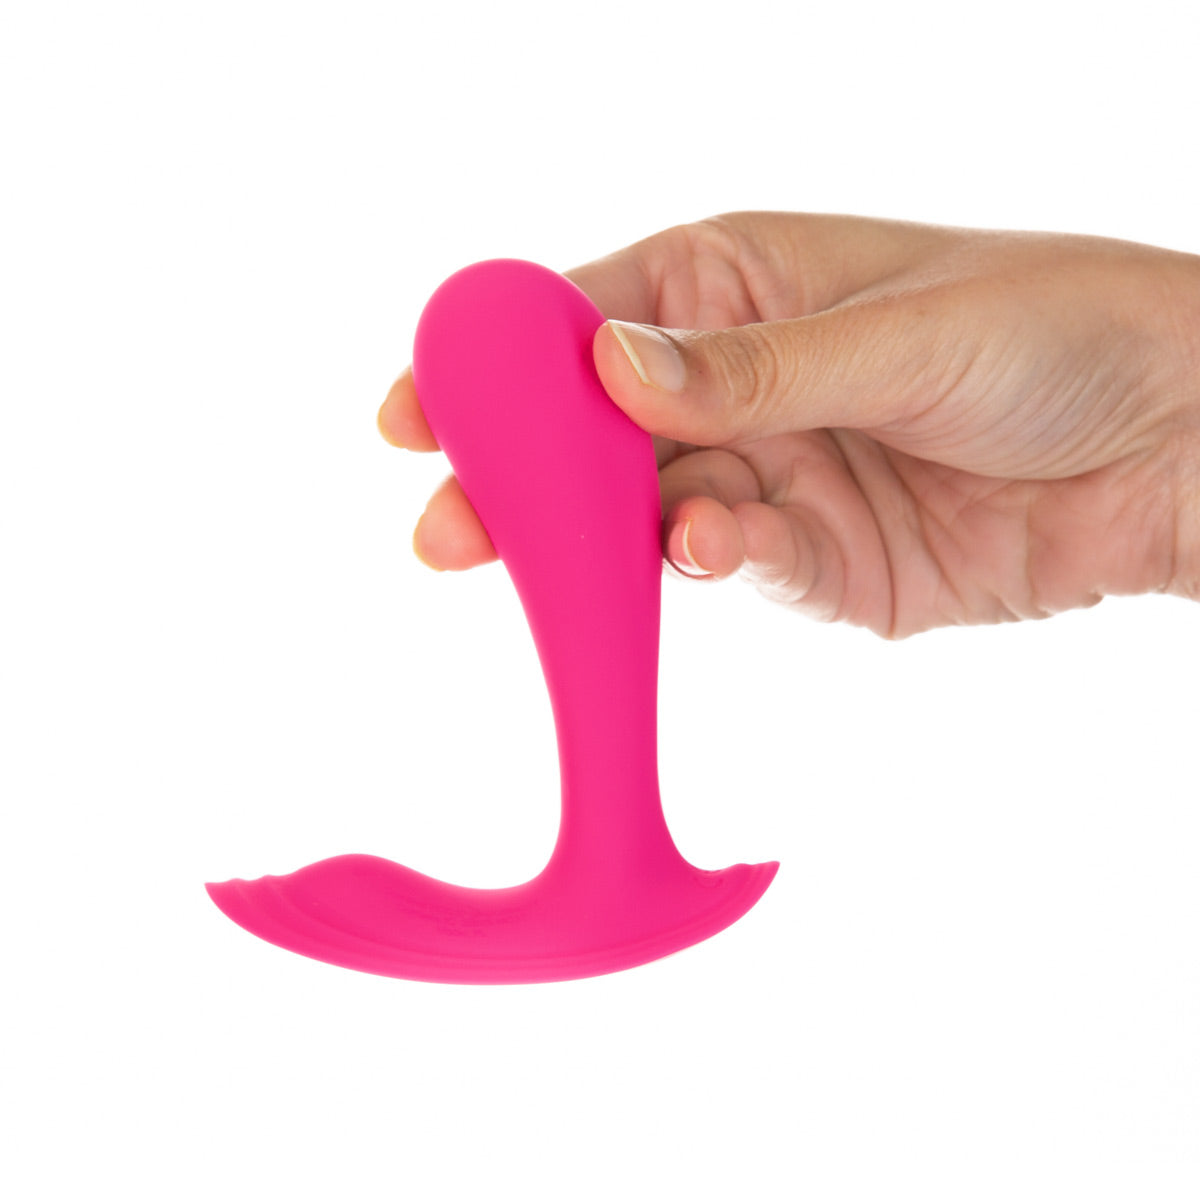 Satisfyer - Top Secret Wearable Vibrator – Pink